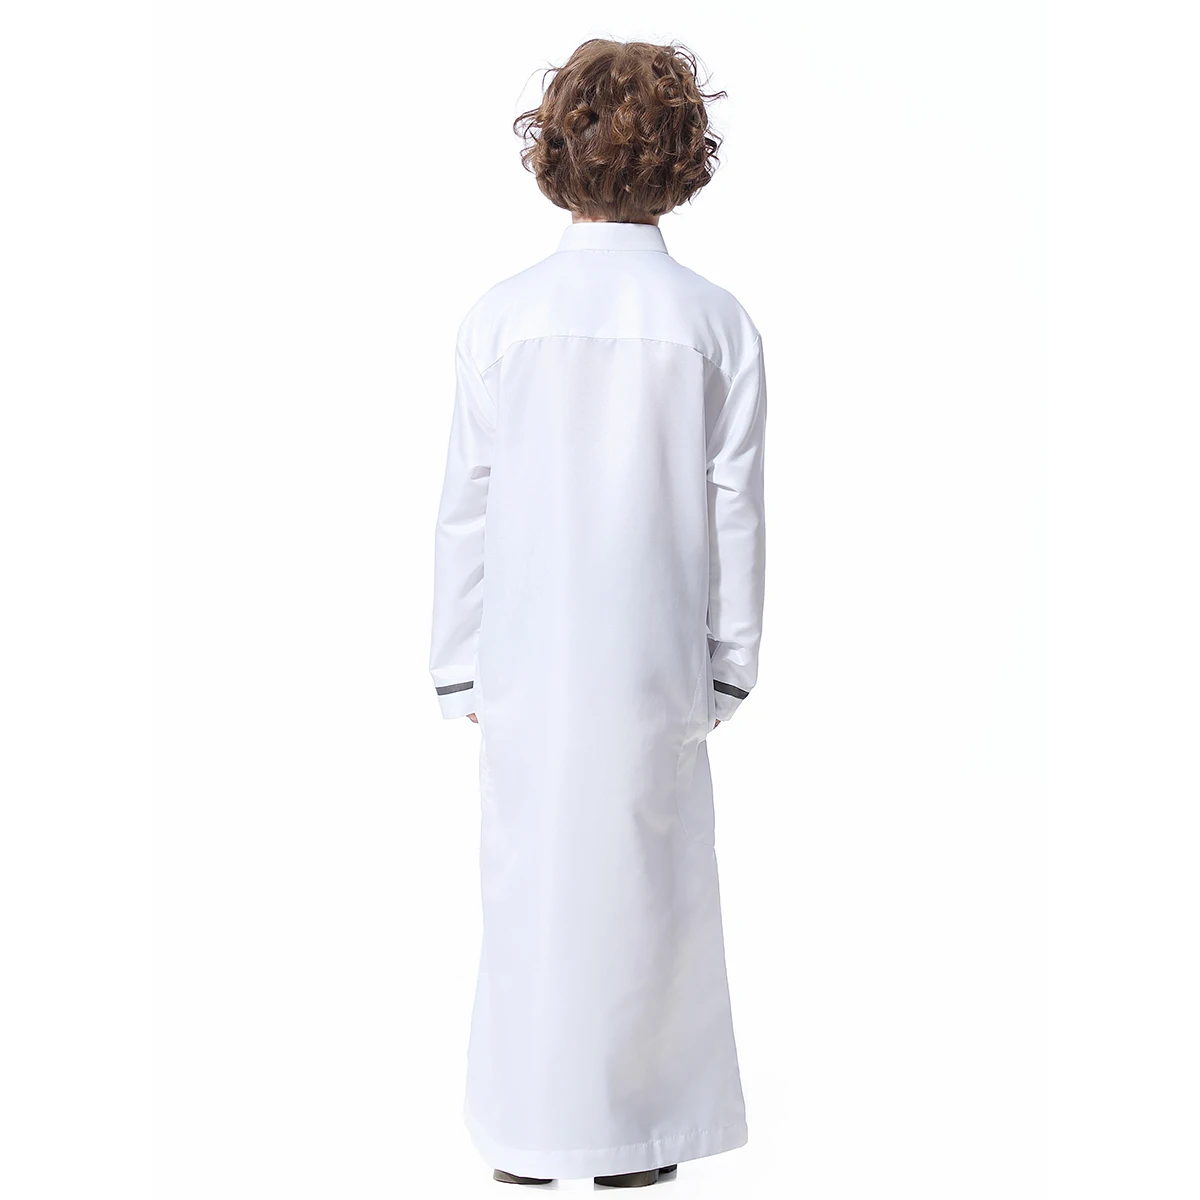 Muslim Arab Boy Robe Saudi Thobe Thoub Jubba Abaya Islamic Clothes Kaftan Dishdasha Long Sleeve Children Kids School Middle East